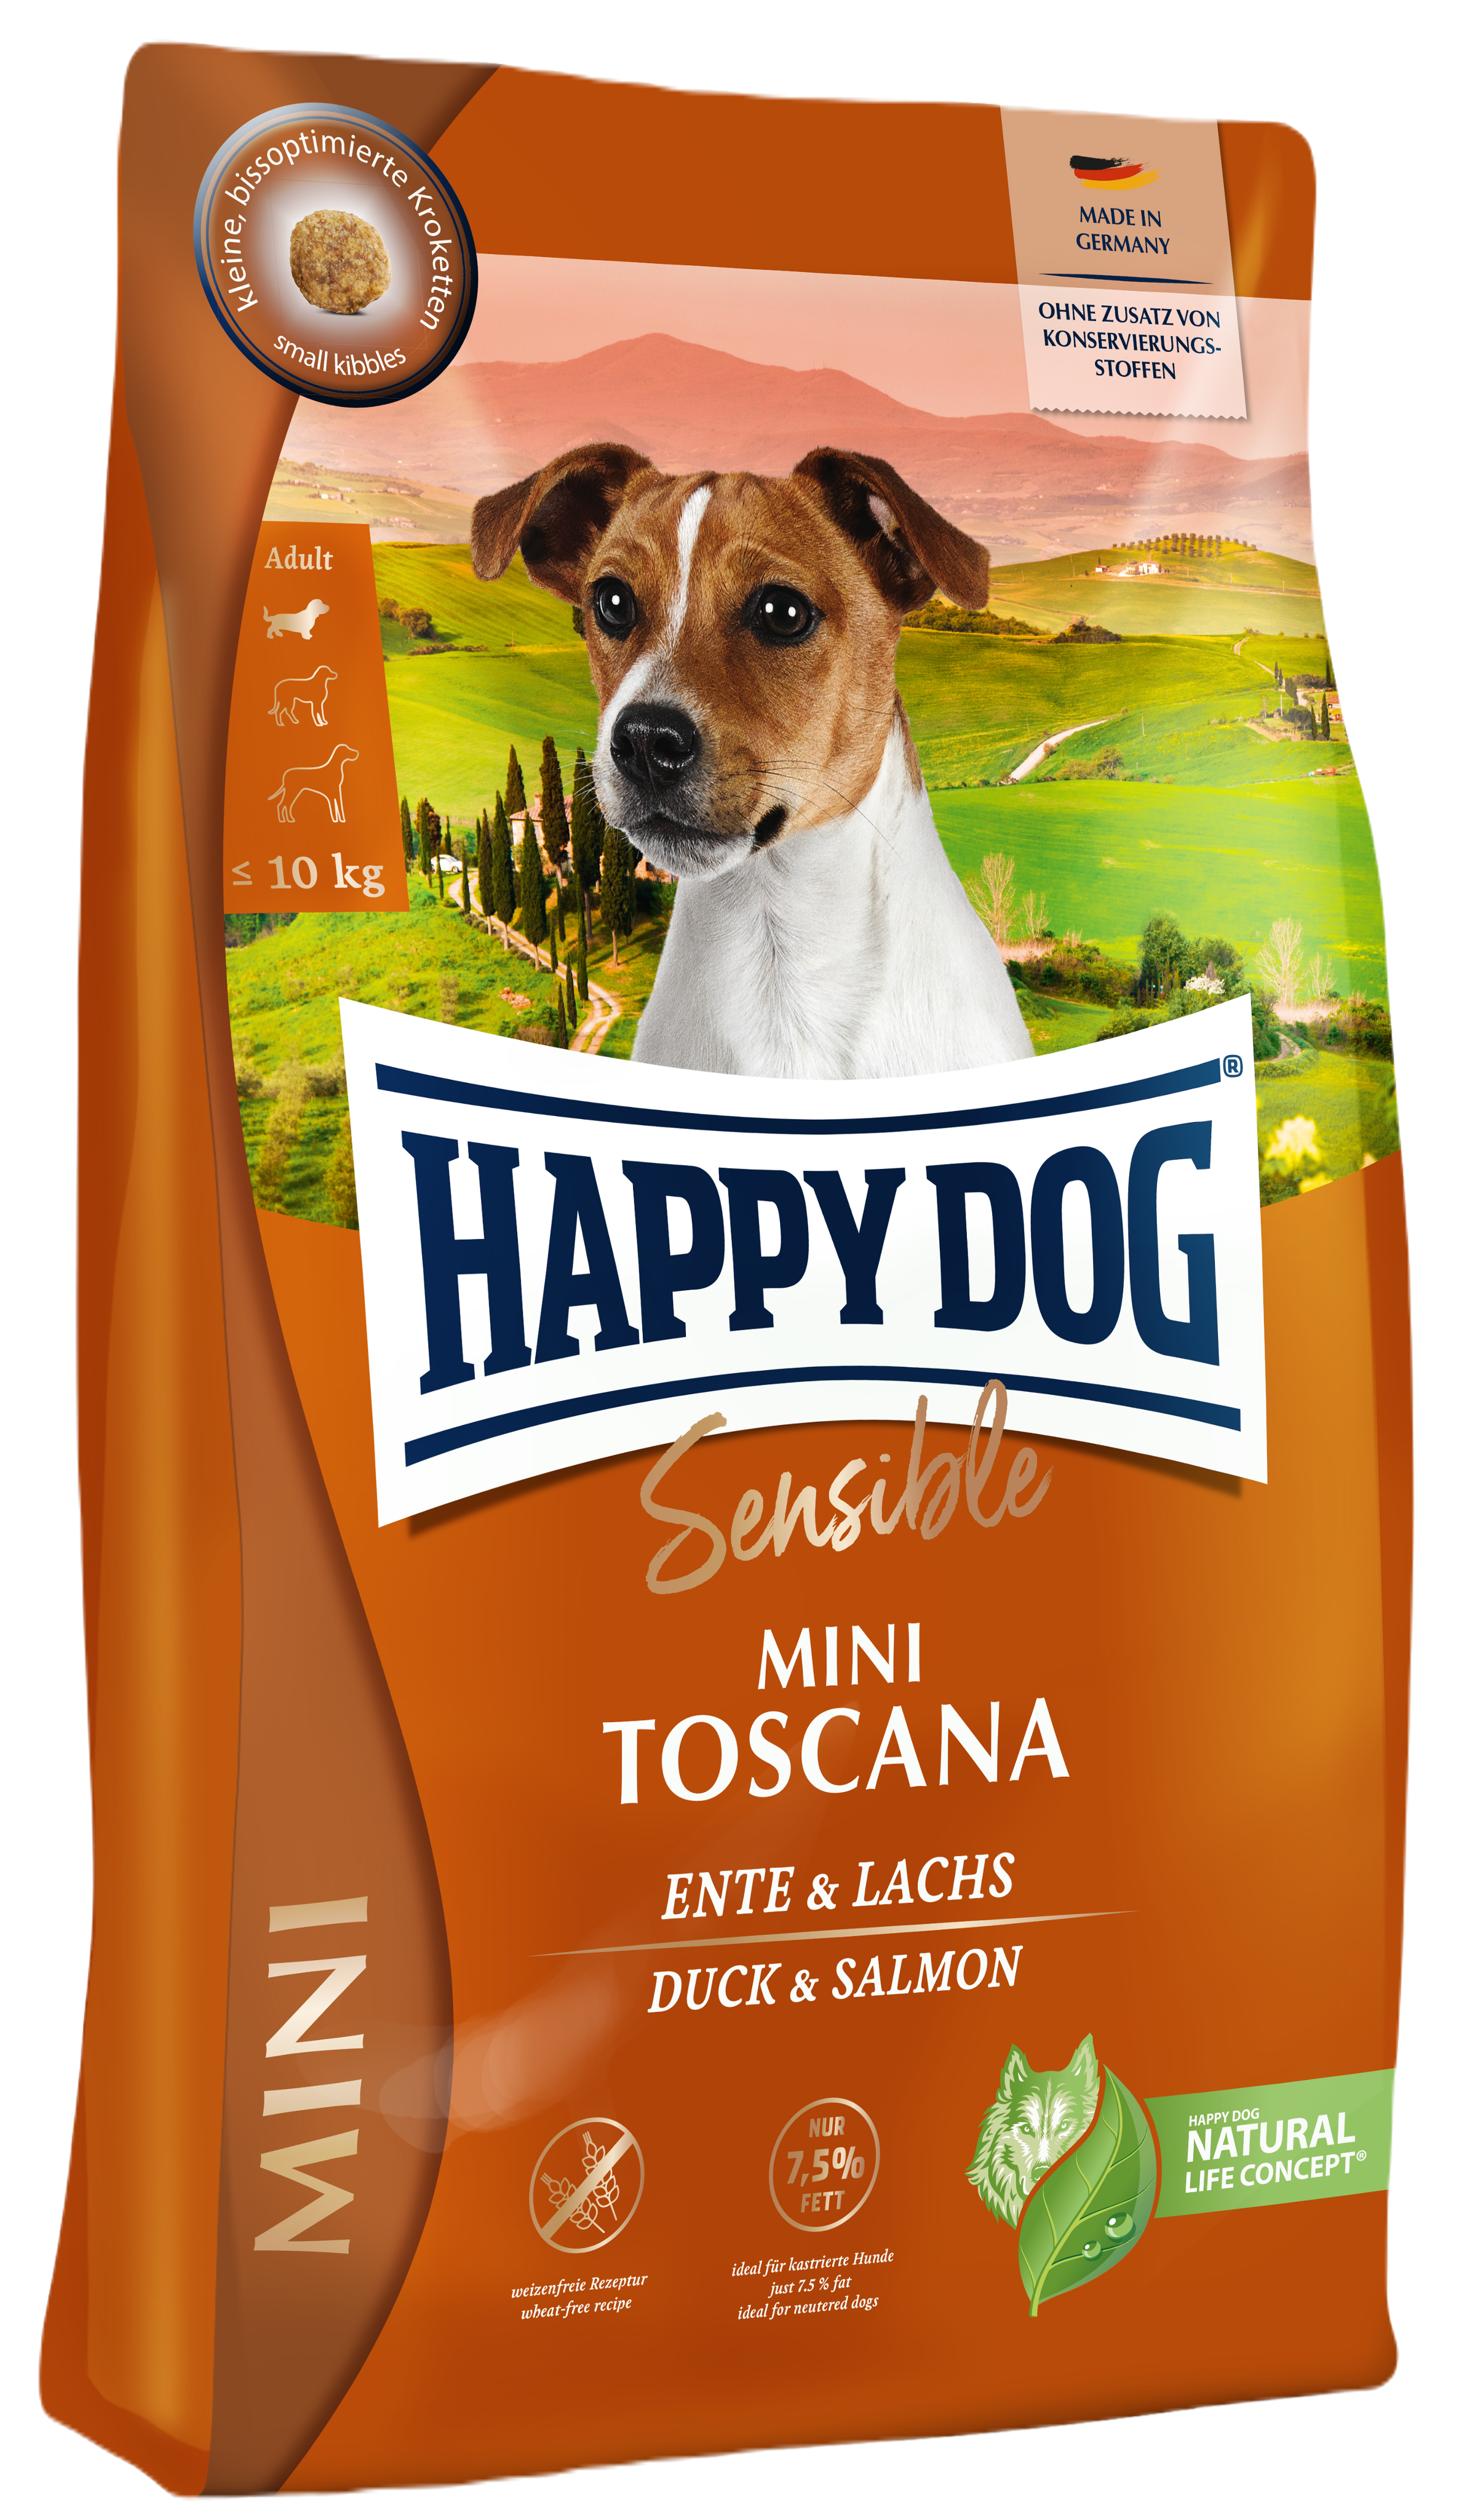 Sensible Mini Toscana Duck & Salmon 10 kg - Hund - Hundmat & hundfoder - Torrfoder för hund - Happy Dog - ZOO.se